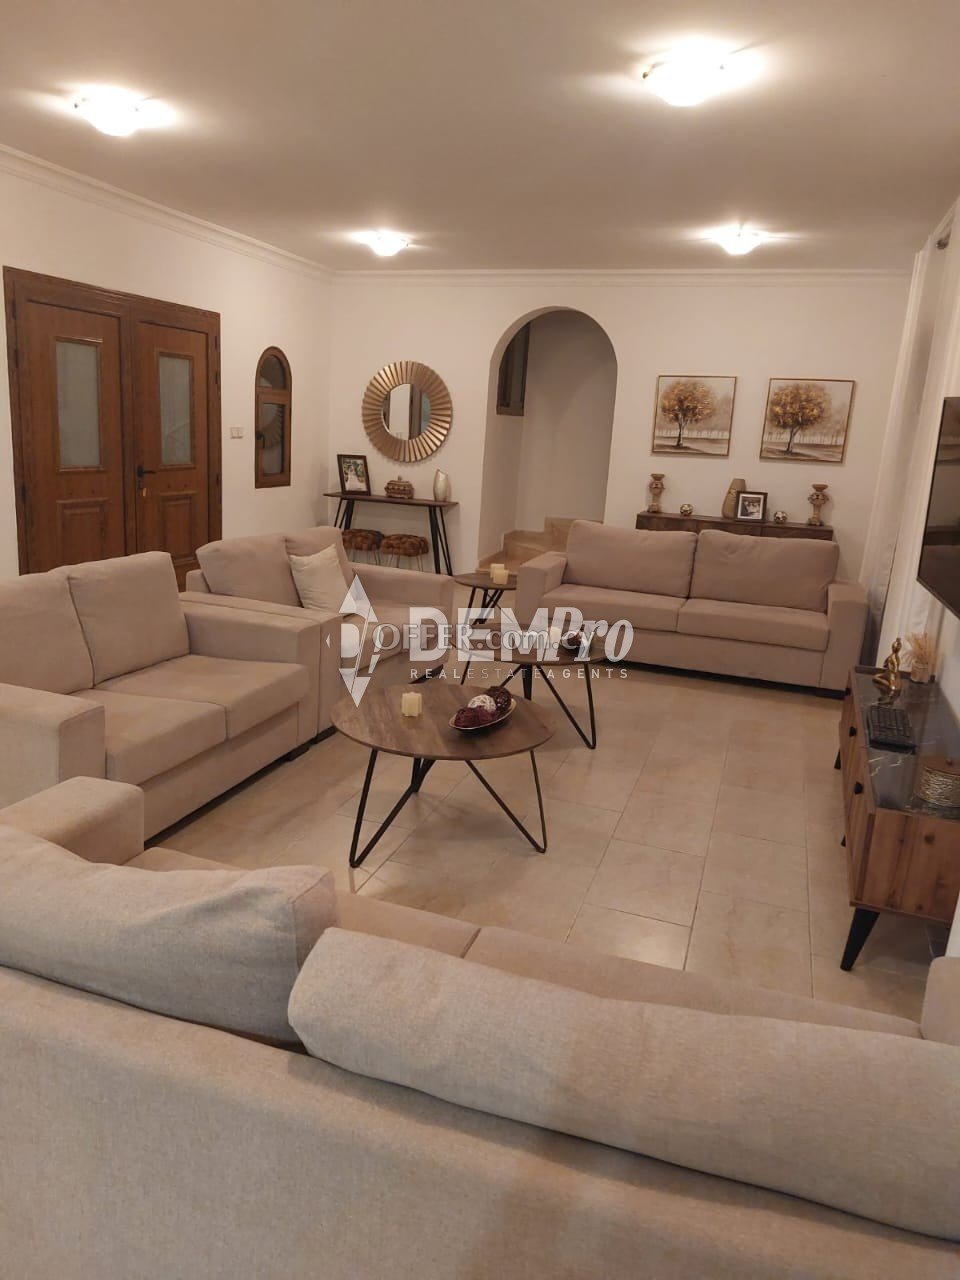 Villa For Rent in Mesogi, Paphos - DP3846 - 9